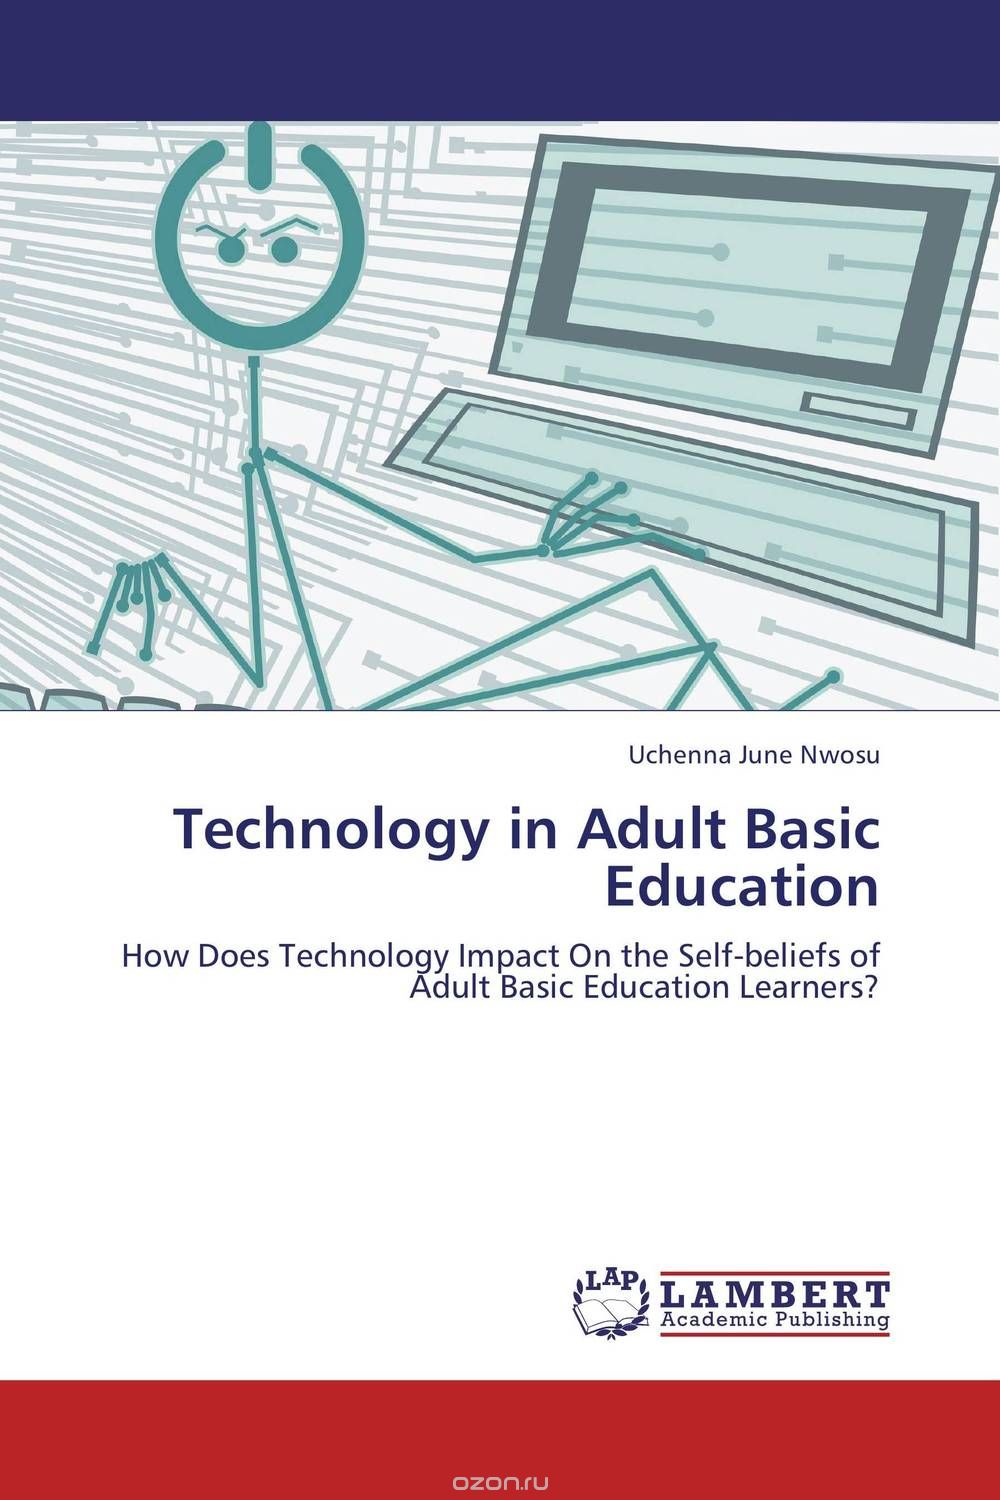 Скачать книгу "Technology in Adult Basic Education"